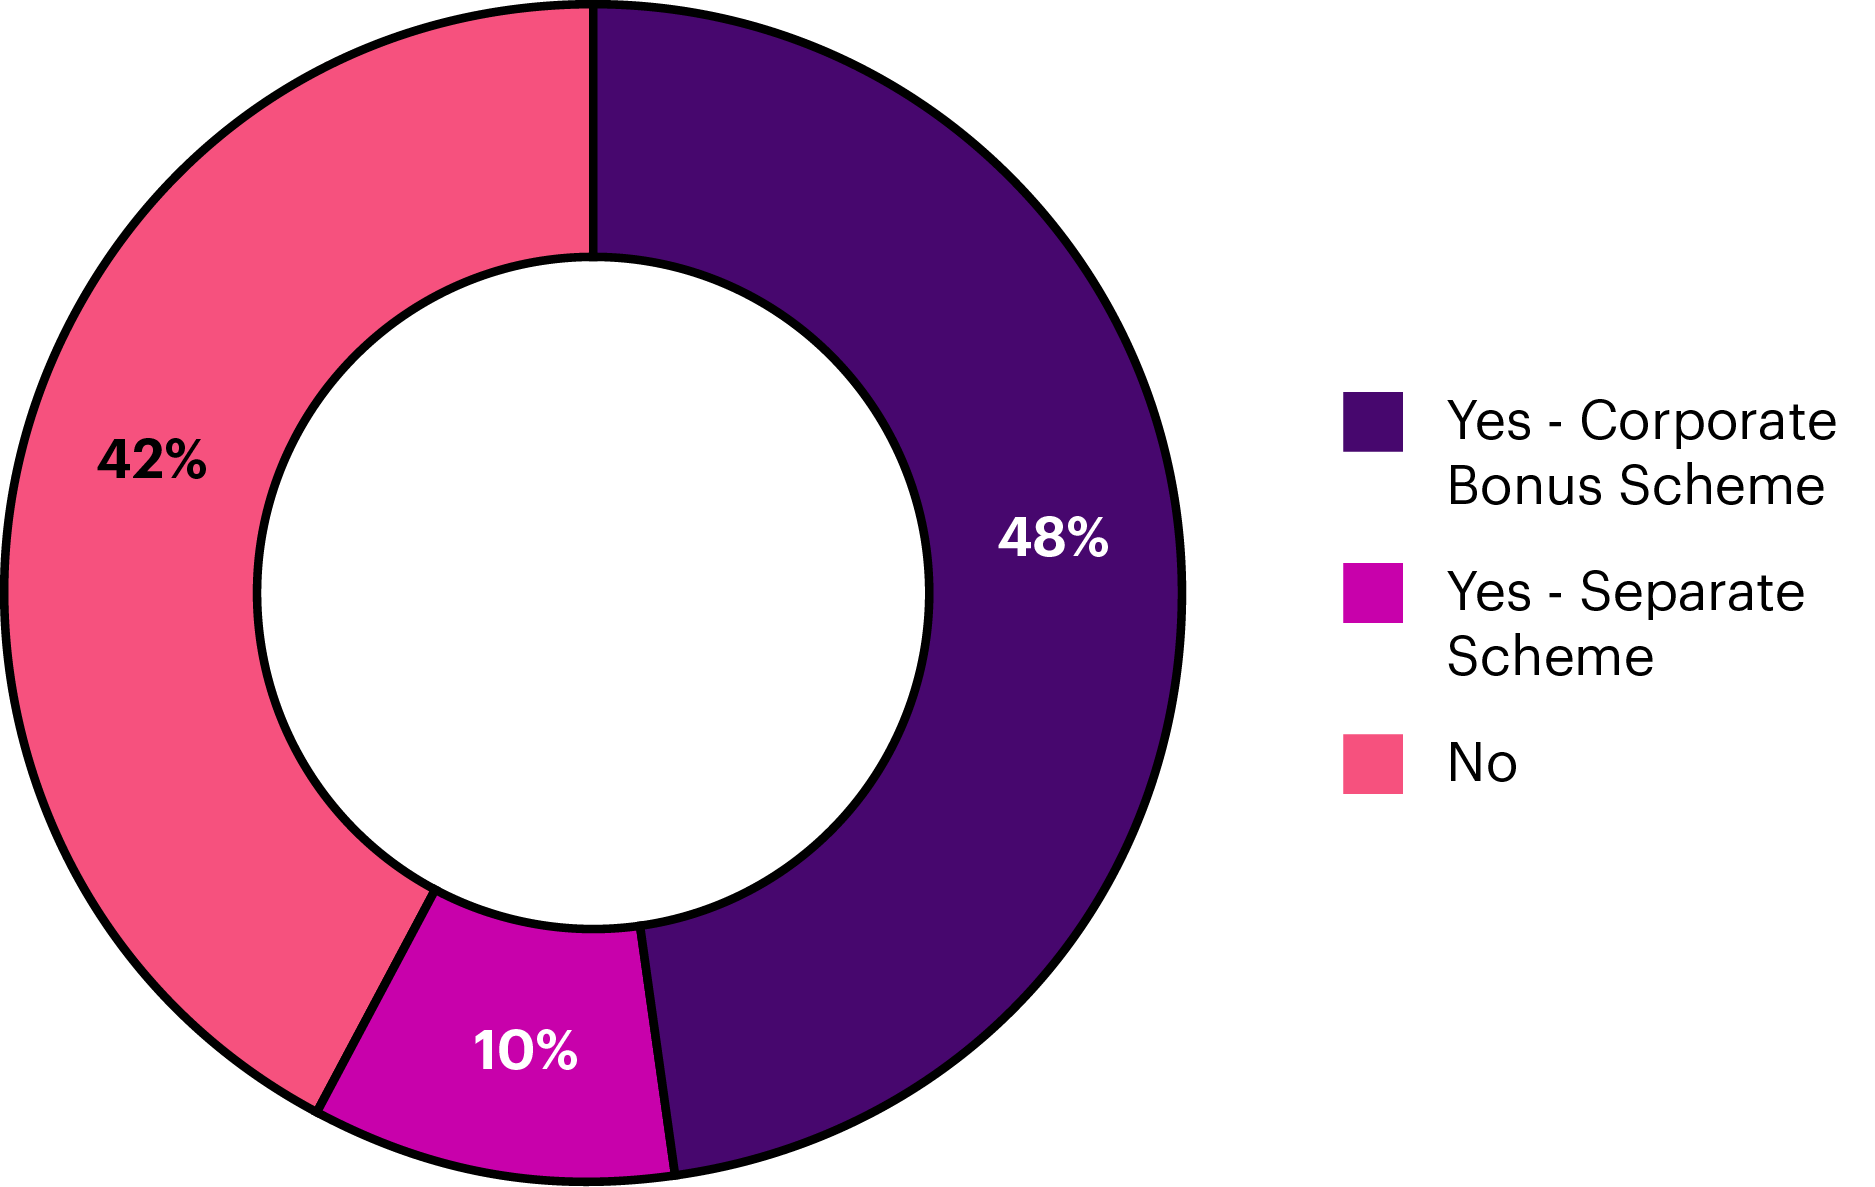 Pie chart showing 48% of apprentices are eligible for a bonus under a corporate bonus scheme, 42% are eligible under a separate scheme, and 10% are not eligible